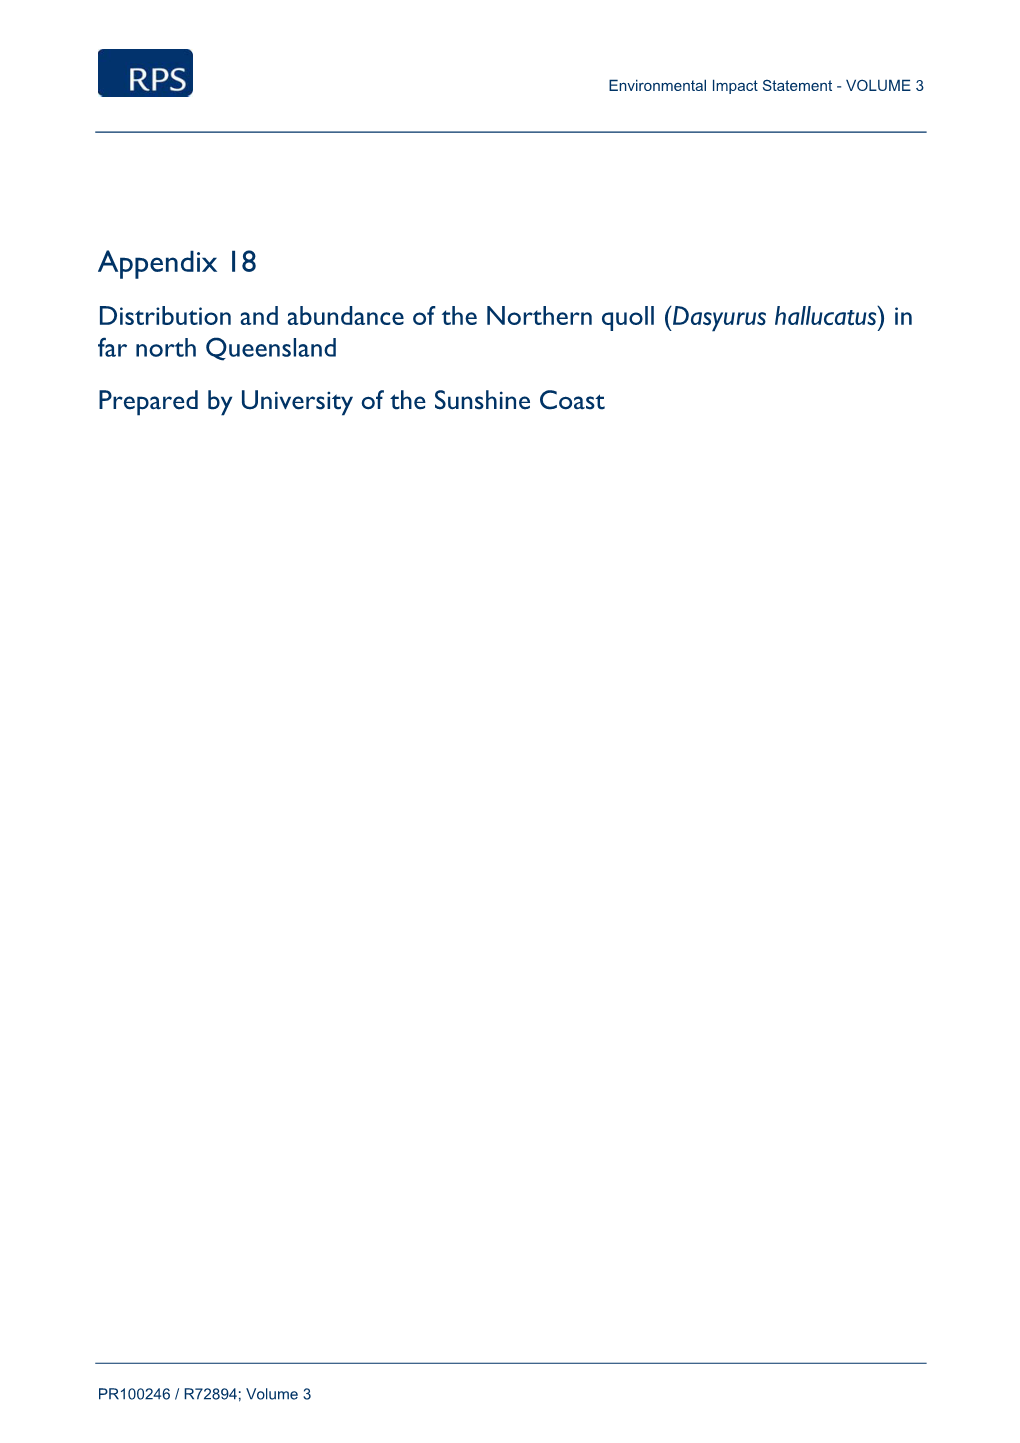 Appendix 18 Distribution and Abundance of the Northern Quoll (Dasyurus Hallucatus) in Far North Queensland